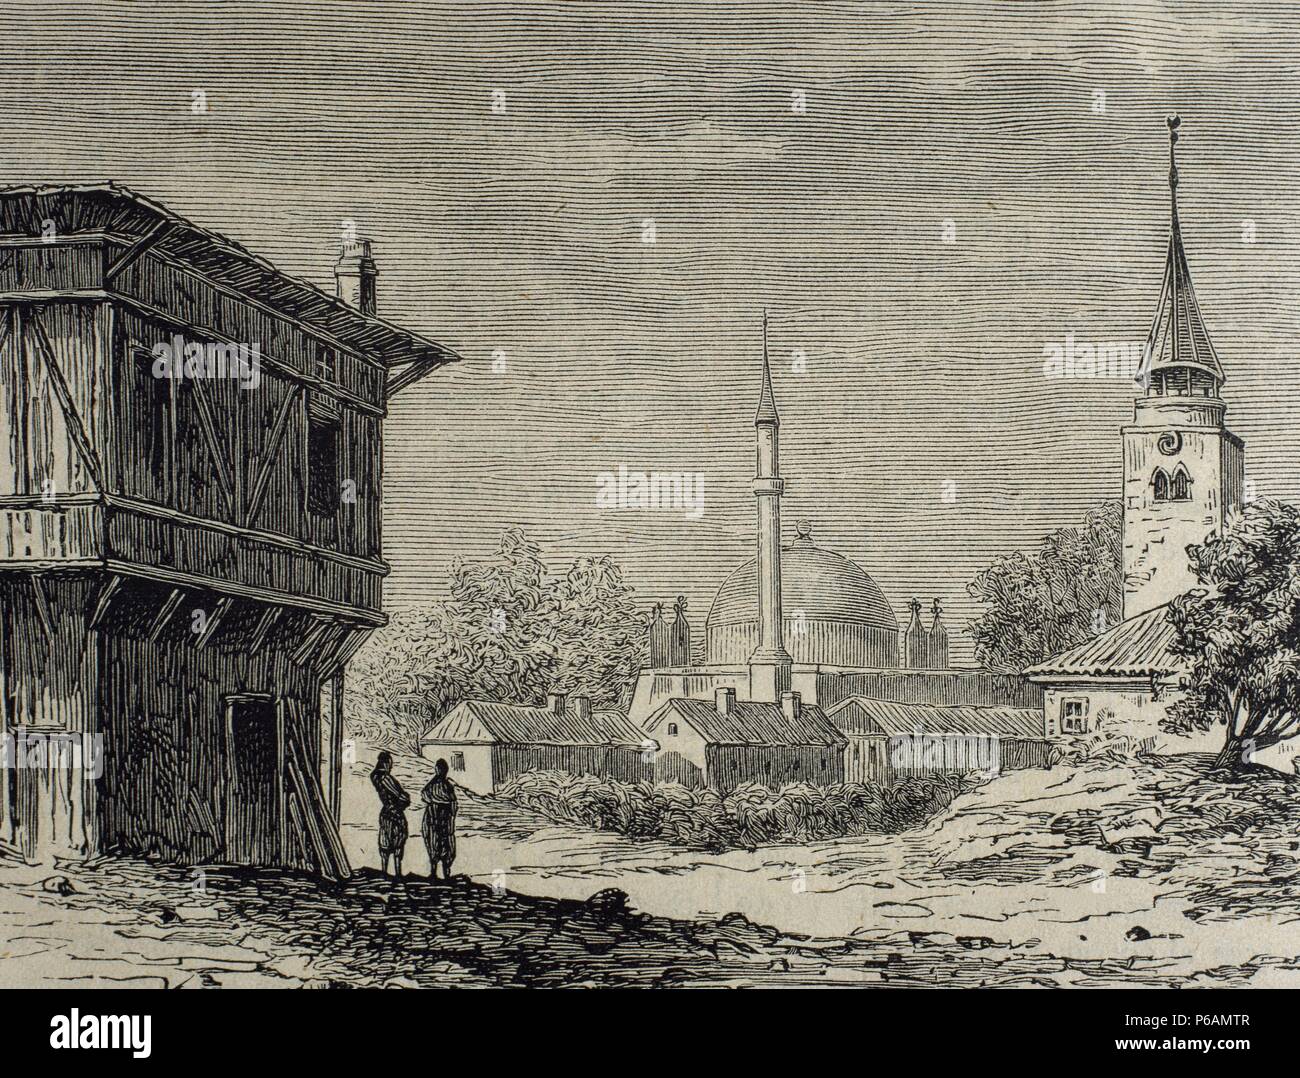 Bulgaria. Razgrad. Ottoman domination. Engraving by Capuz 'La Ilustracion Espanola y Americana', 1877. Stock Photo